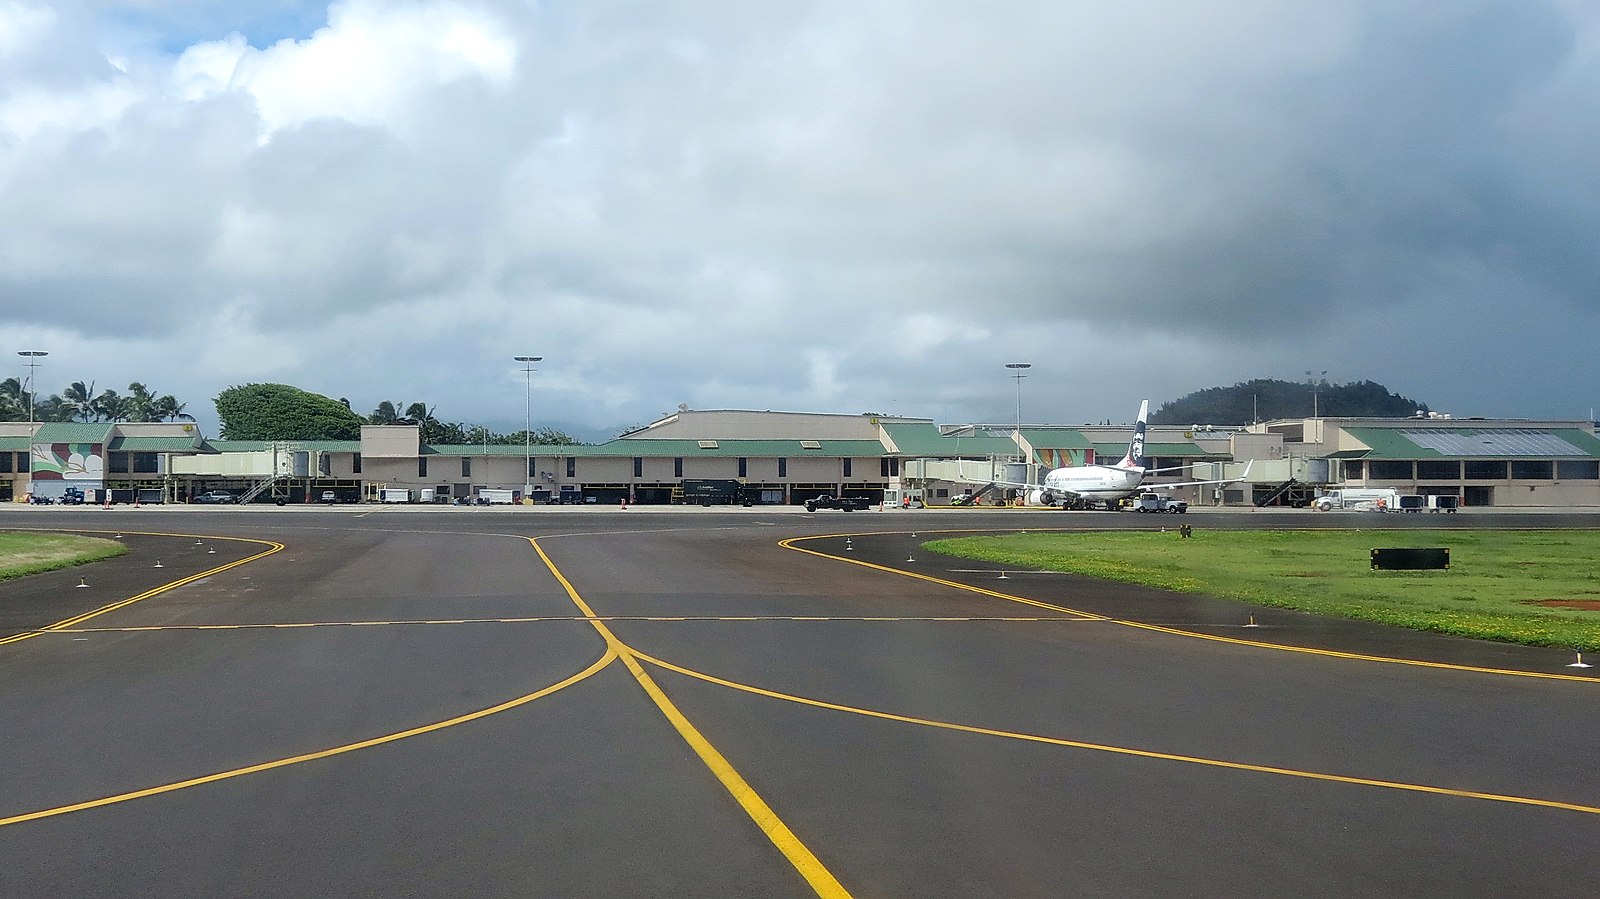 Lihue Airport serves the island of Kauai in Hawaii.